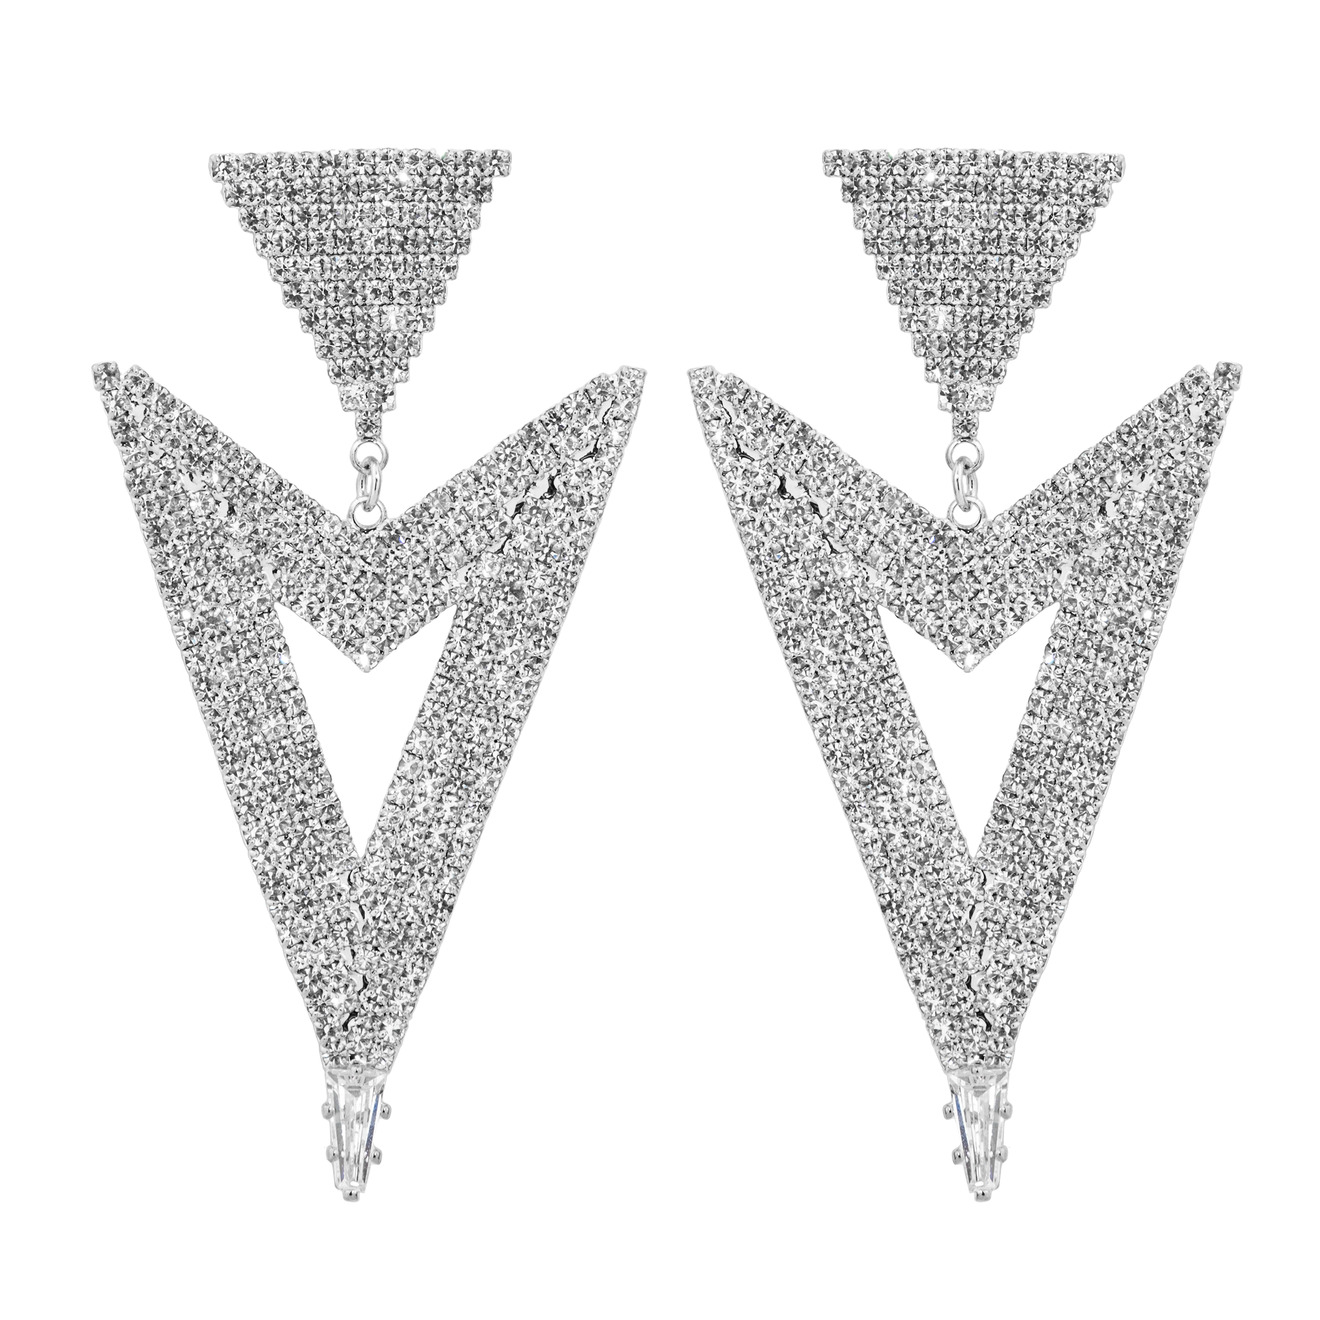 Herald Percy Серебристые серьги-стрелки с кристаллами herald percy серебристые серьги звезды с кристаллами